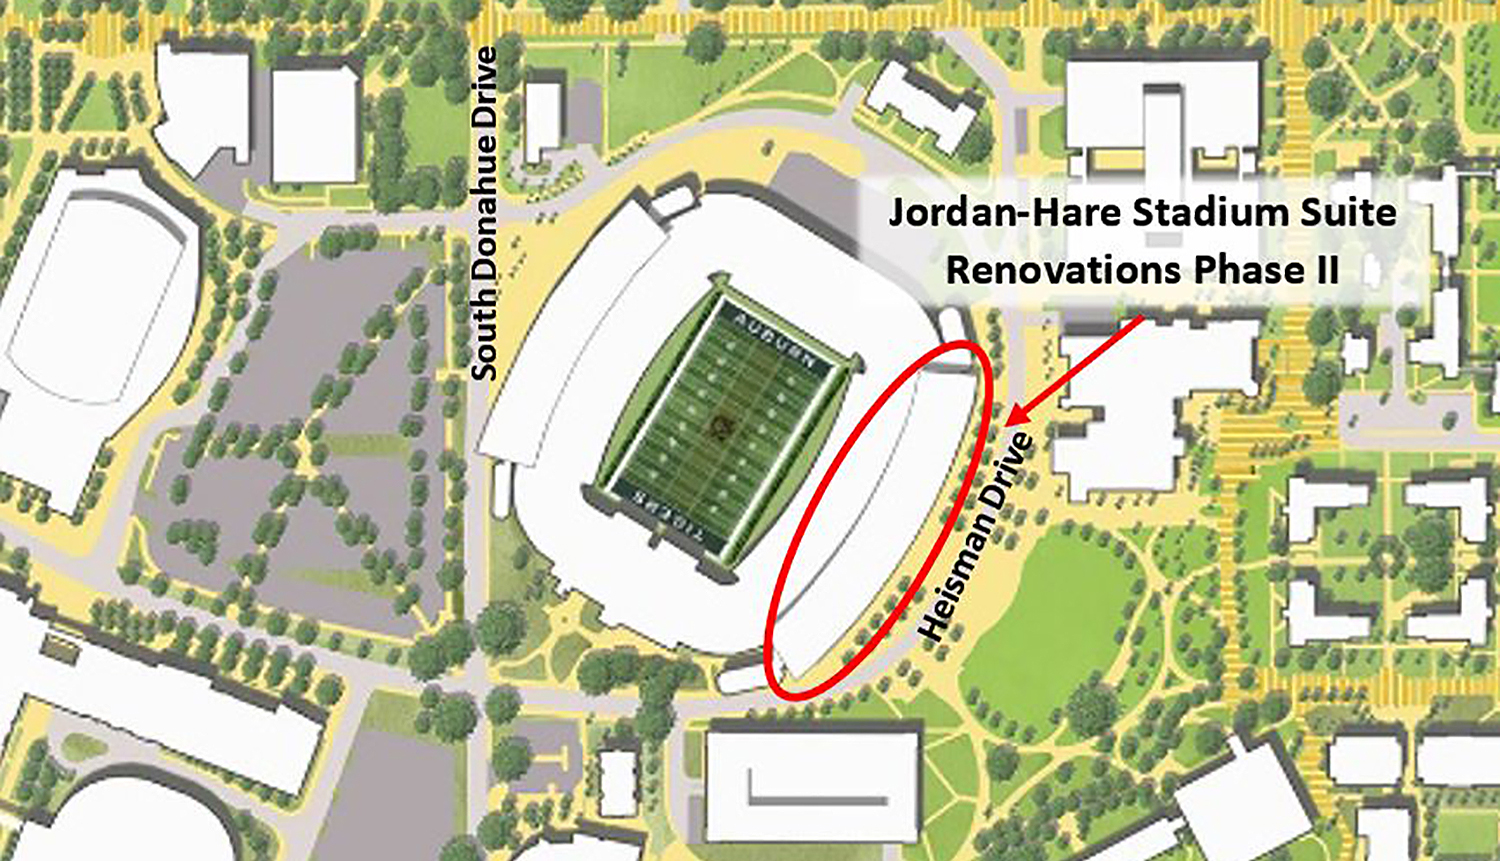 Jordan-Hare Stadium - East Suite Renovations (Phase II)